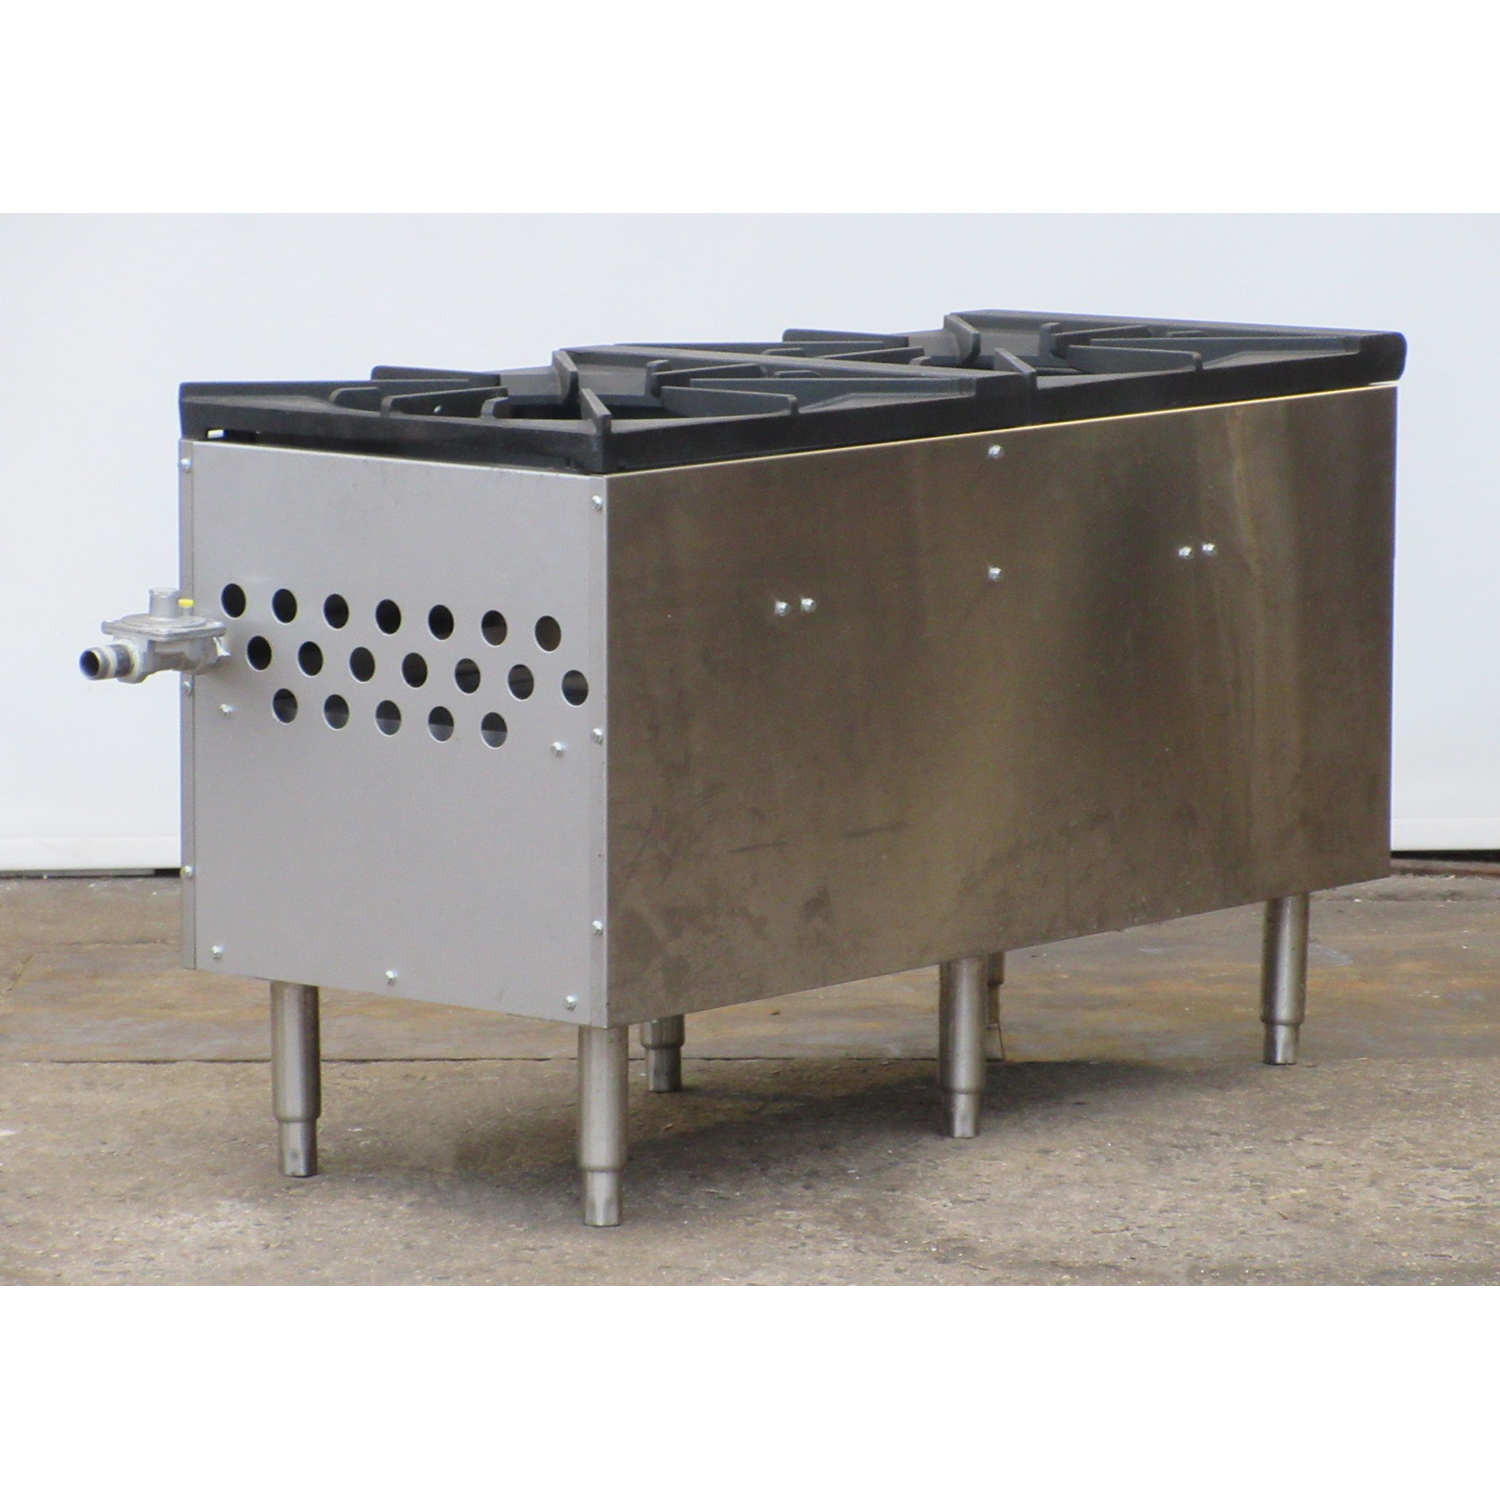 Atosa ATSP-18-2 2-Burner Gas Stock Pot Range, Used Excellent Condition image 1